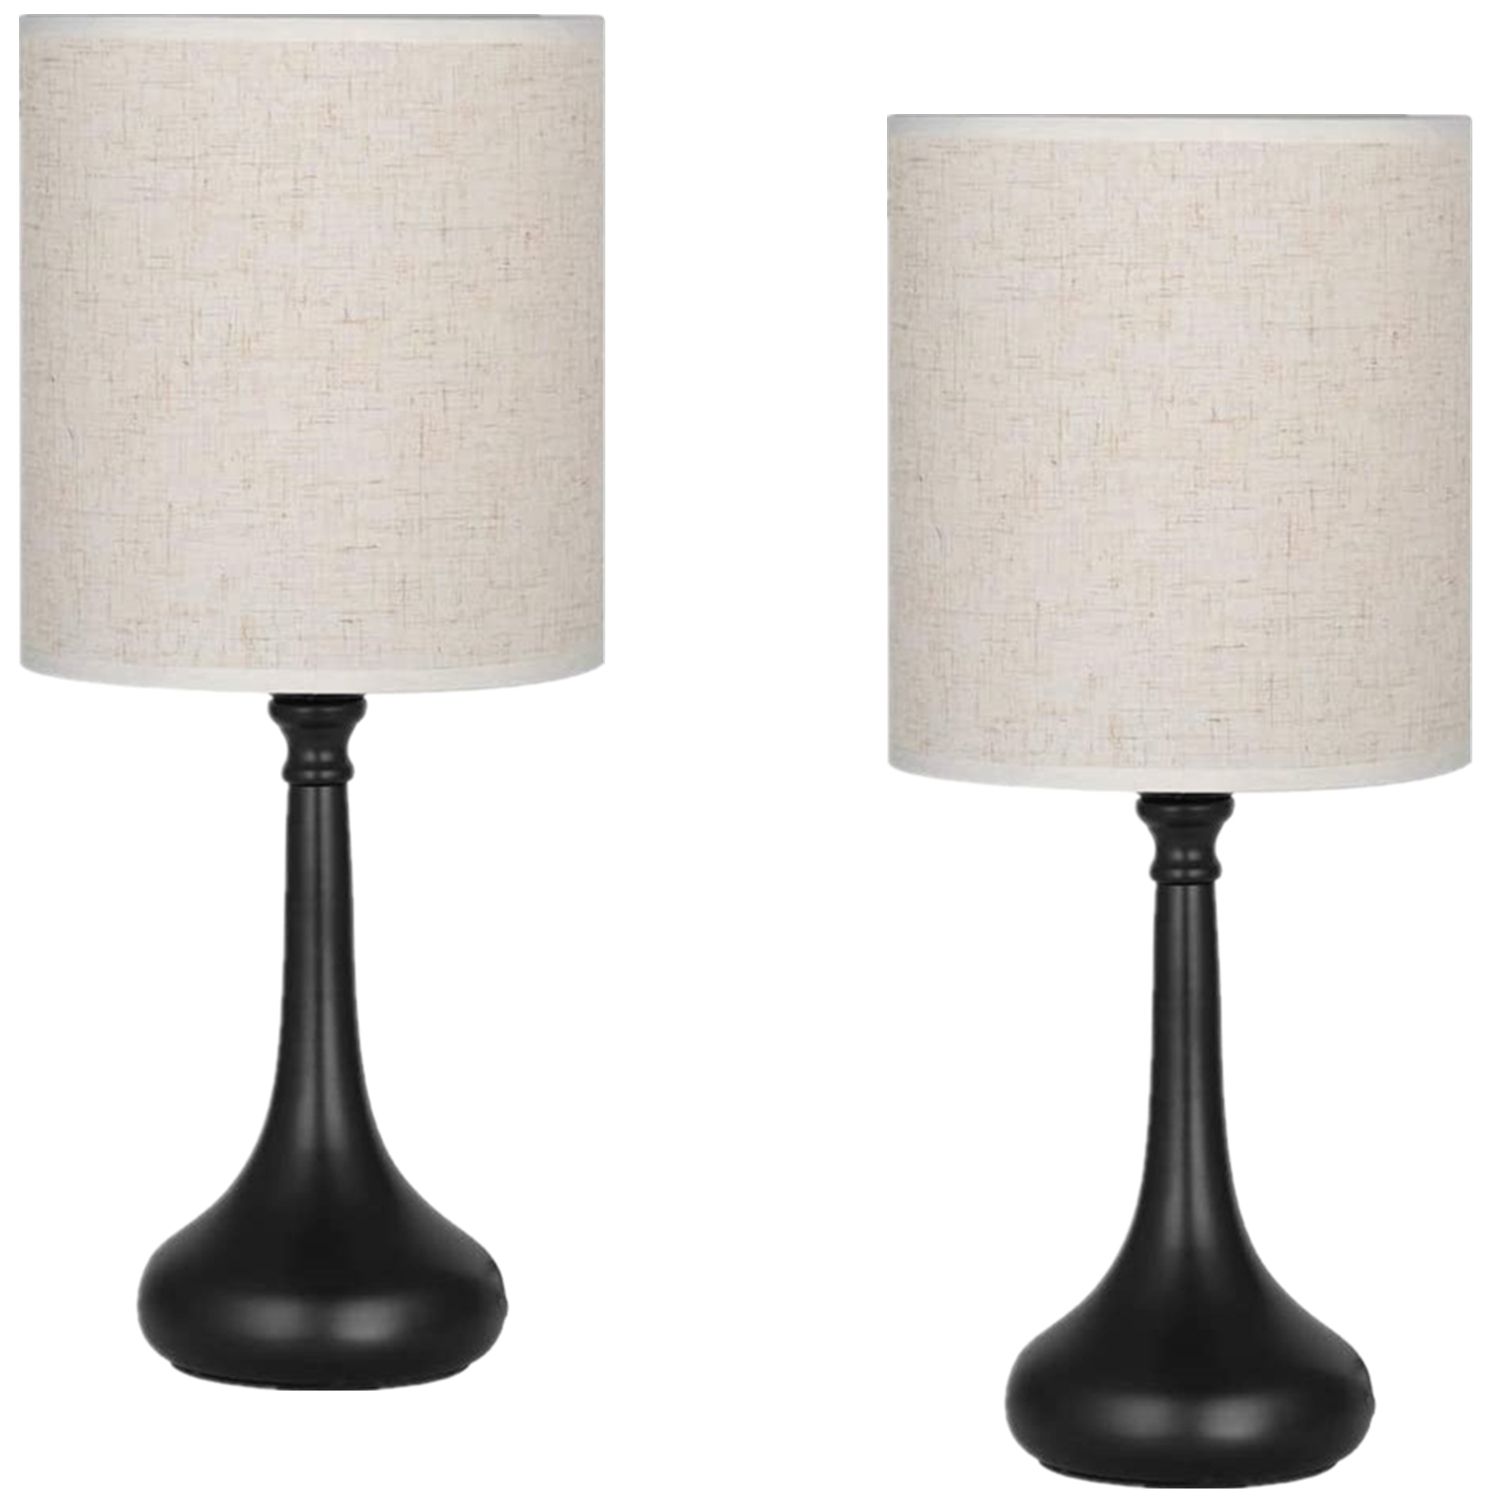 Set of 2 Black Modern Bedroom Nightstand Lamp by Oumilen | Walmart (US)